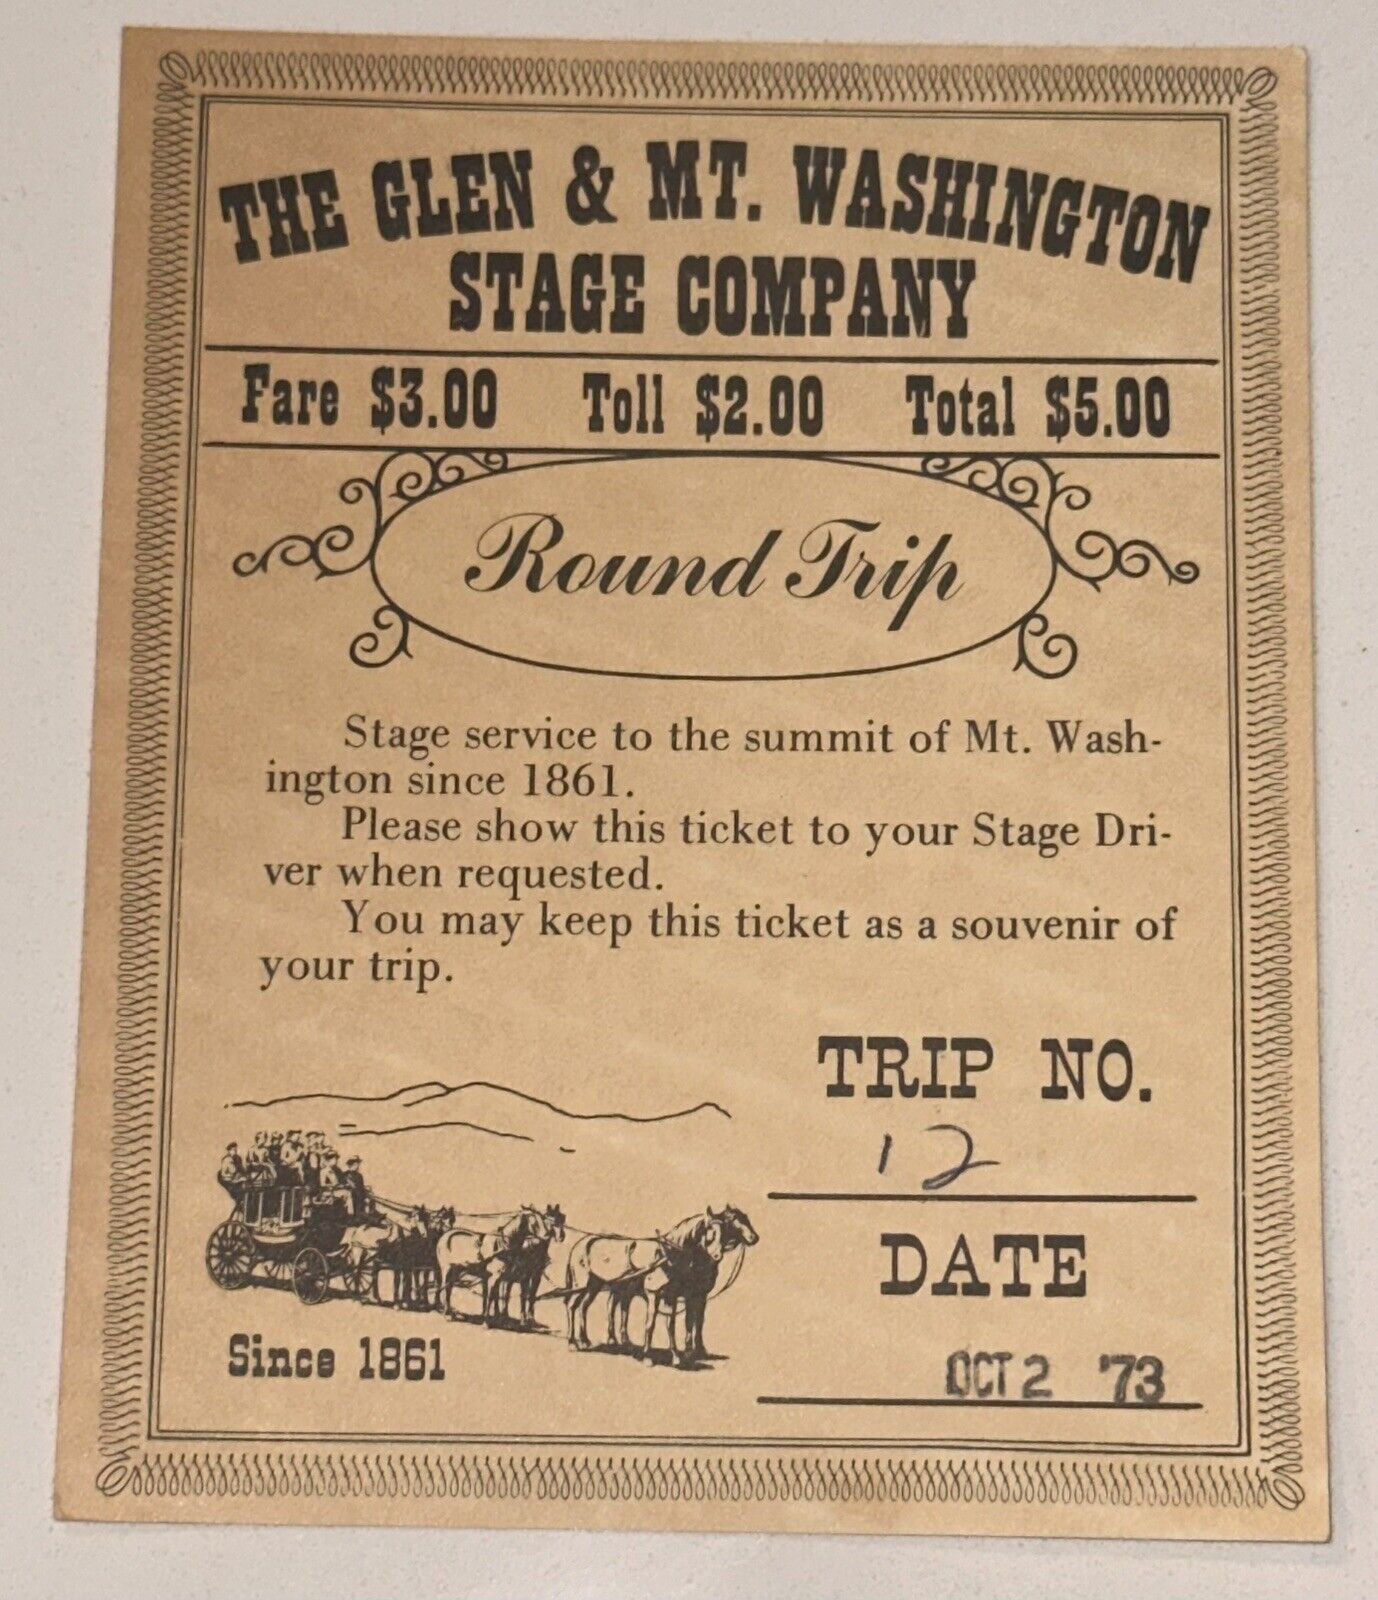 10/2/73 Vintage The Glen Mt Washingtonn Stage Company Round Trip #12 Ticket Stub